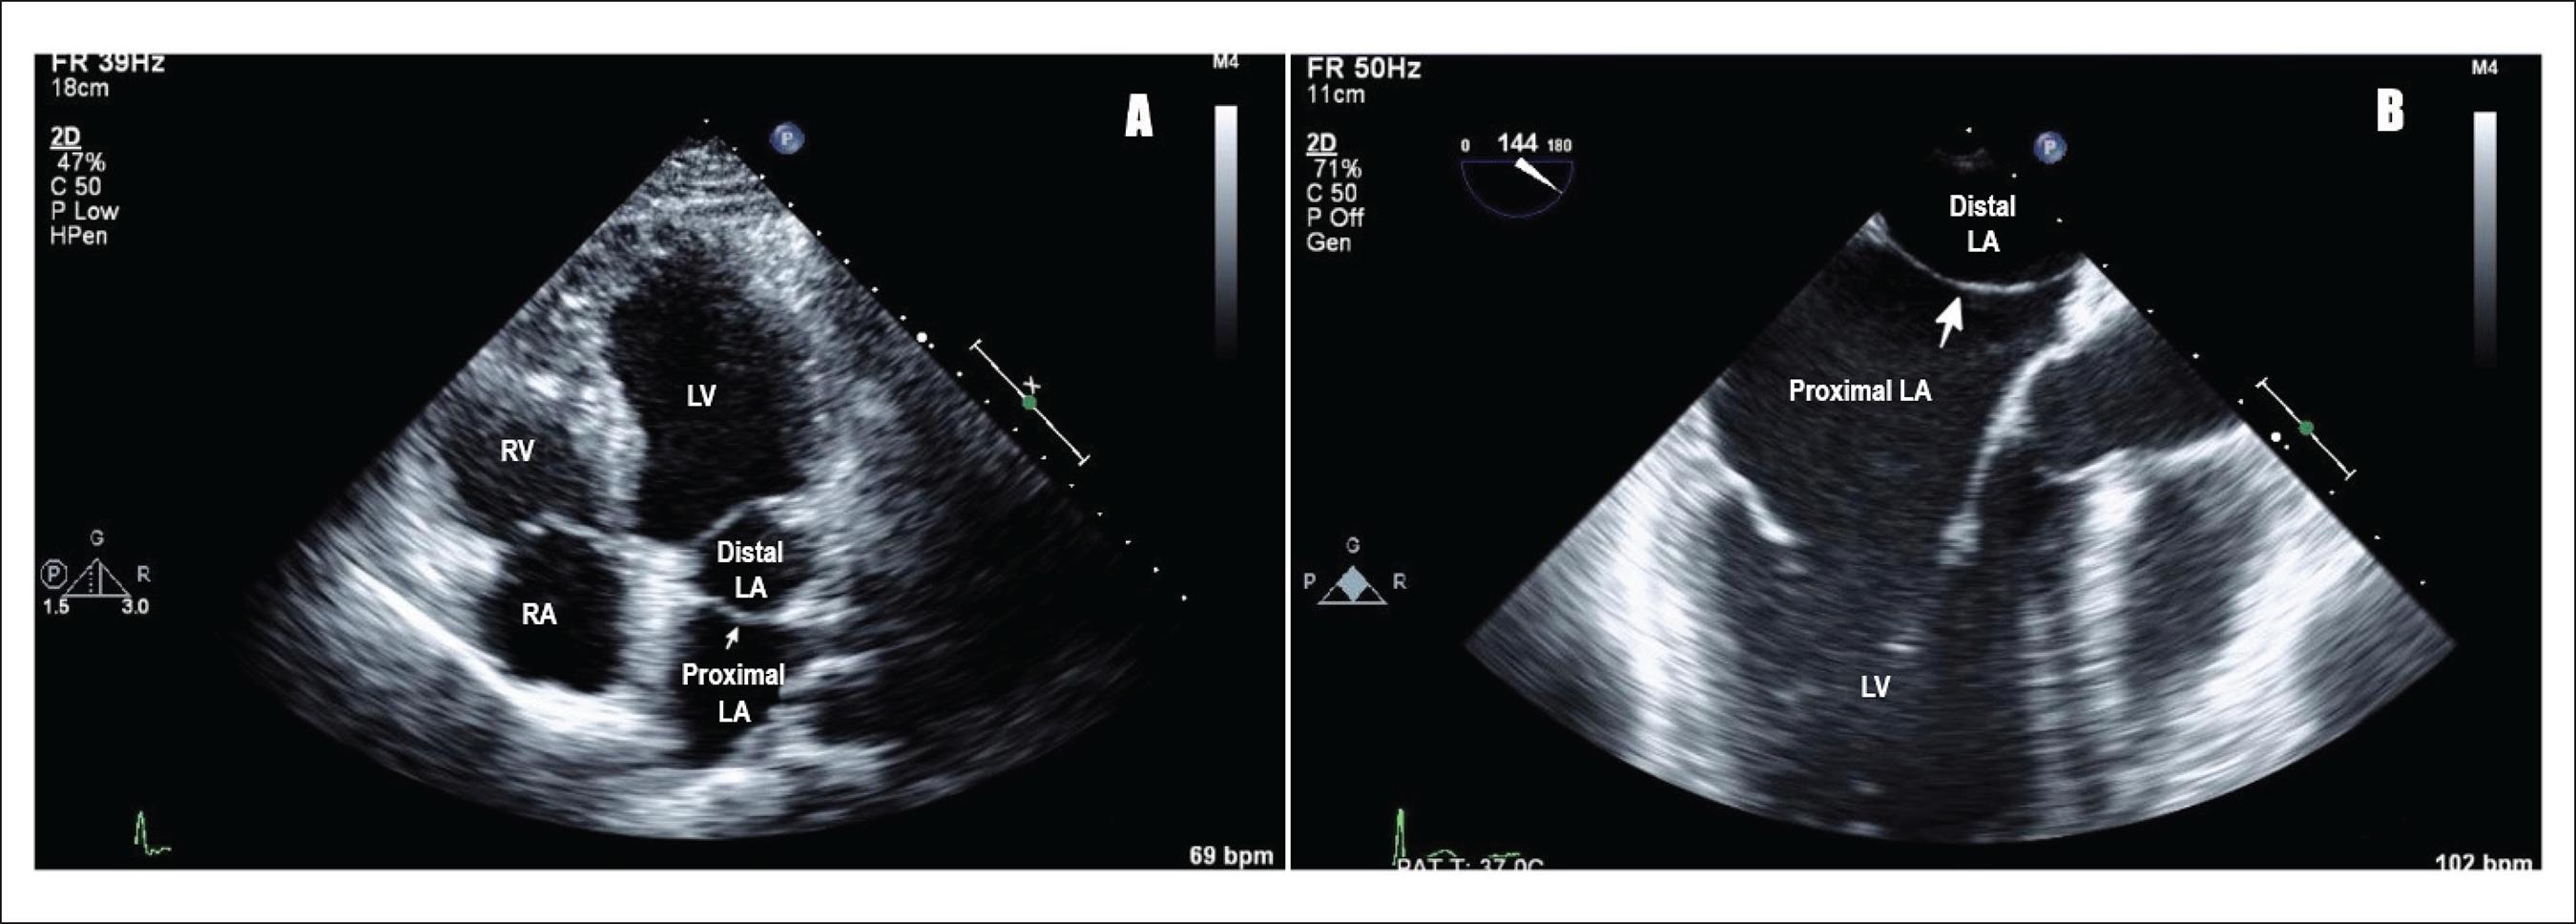 Figure 1 A) Transthoracic echocardiogram showing cor triatriatum: proximal and distal left atrium separated by a membrane (Pointing white arrow), LA: left atrium; LV: left ventricle; RV: right ventricle; RA: right atrium. B) Transesophageal echocardiogram showing cor triatriatum: proximal and distal left atrium separated by a membrane (Pointing white arrow), LA: left atrium; LV: left ventricle. 